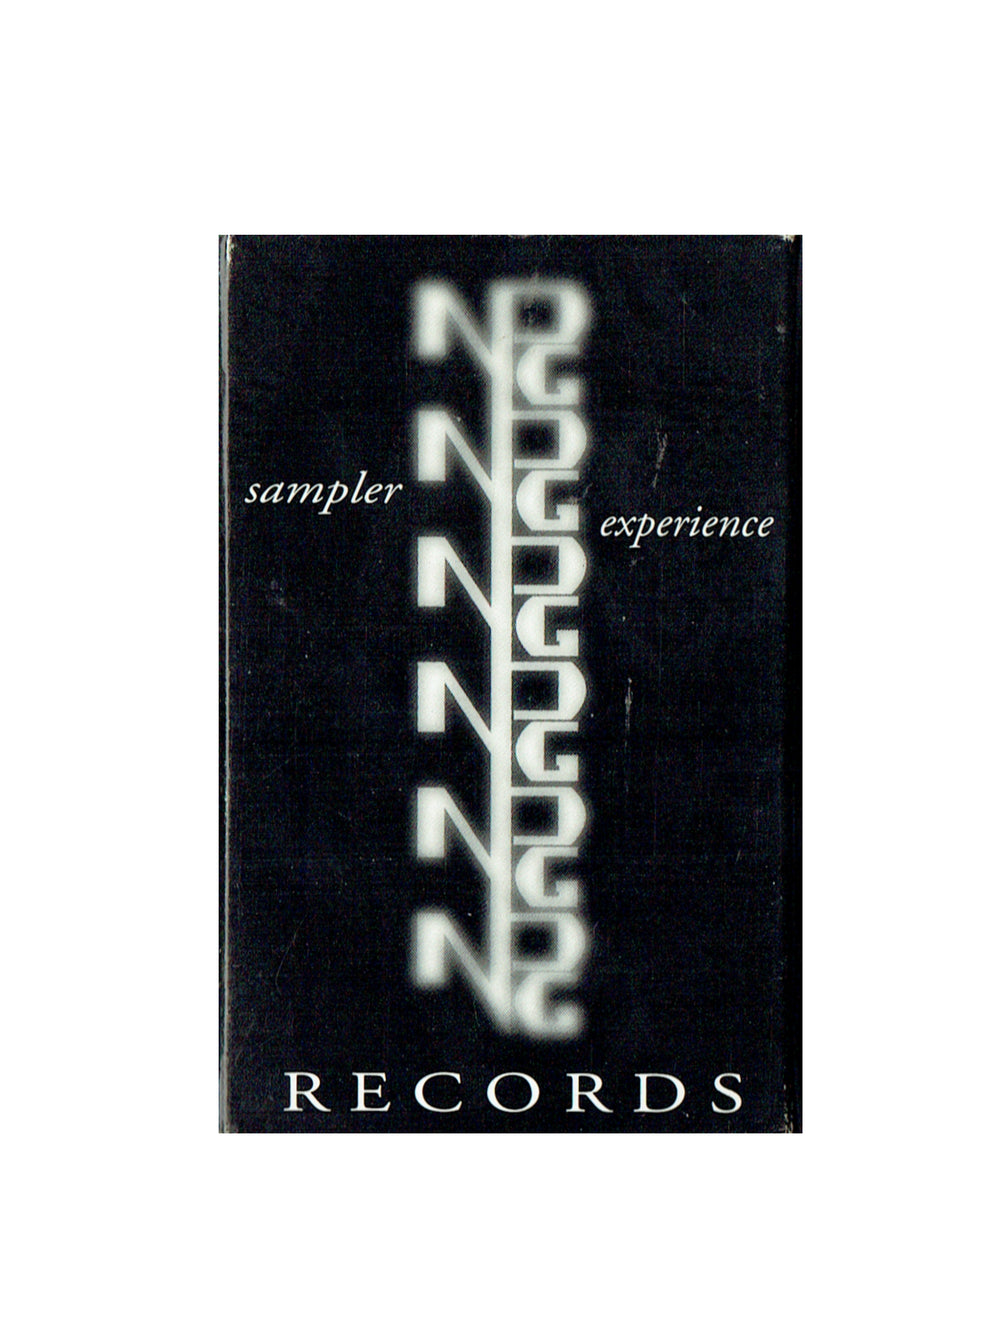 Prince NPG Sampler Experience Original Cassette Tape USA Release